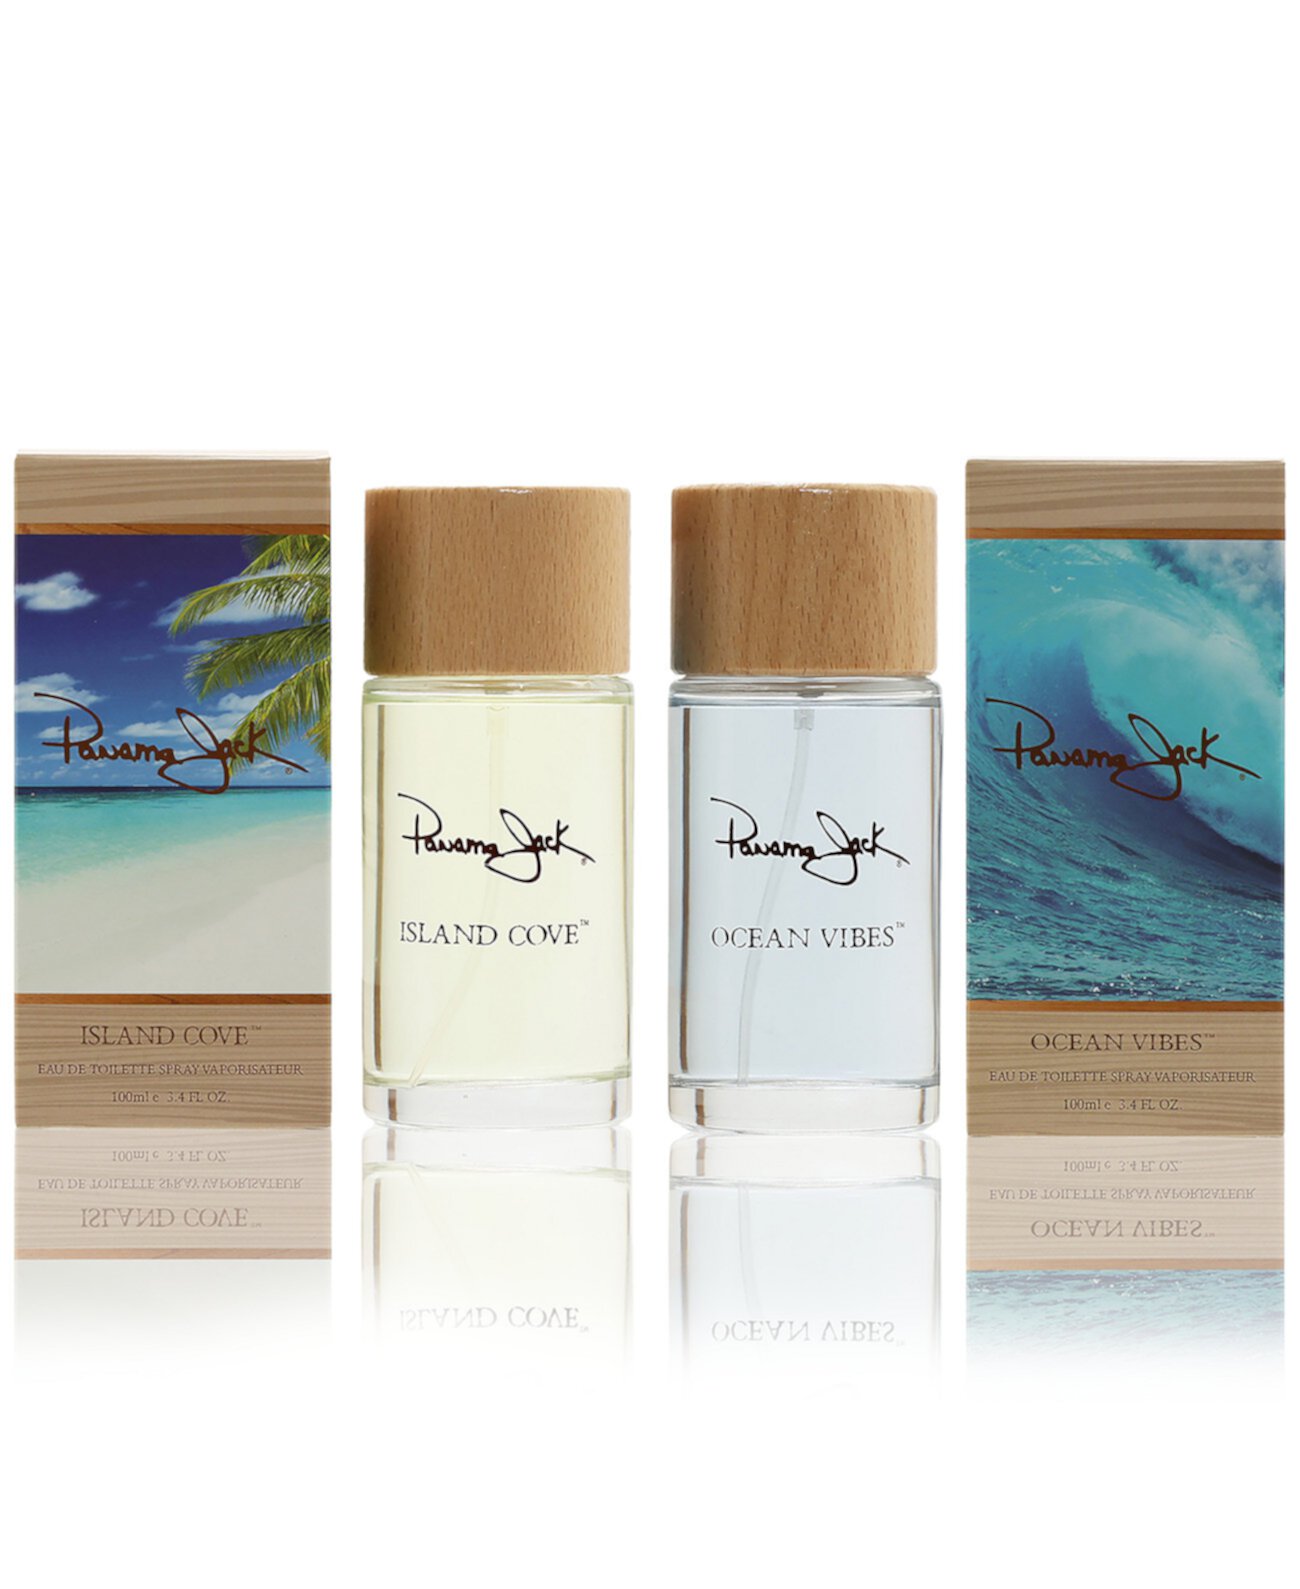 2-Pc. Island Cove & Ocean Vibes Eau de Toilette Gift Set Panama Jack